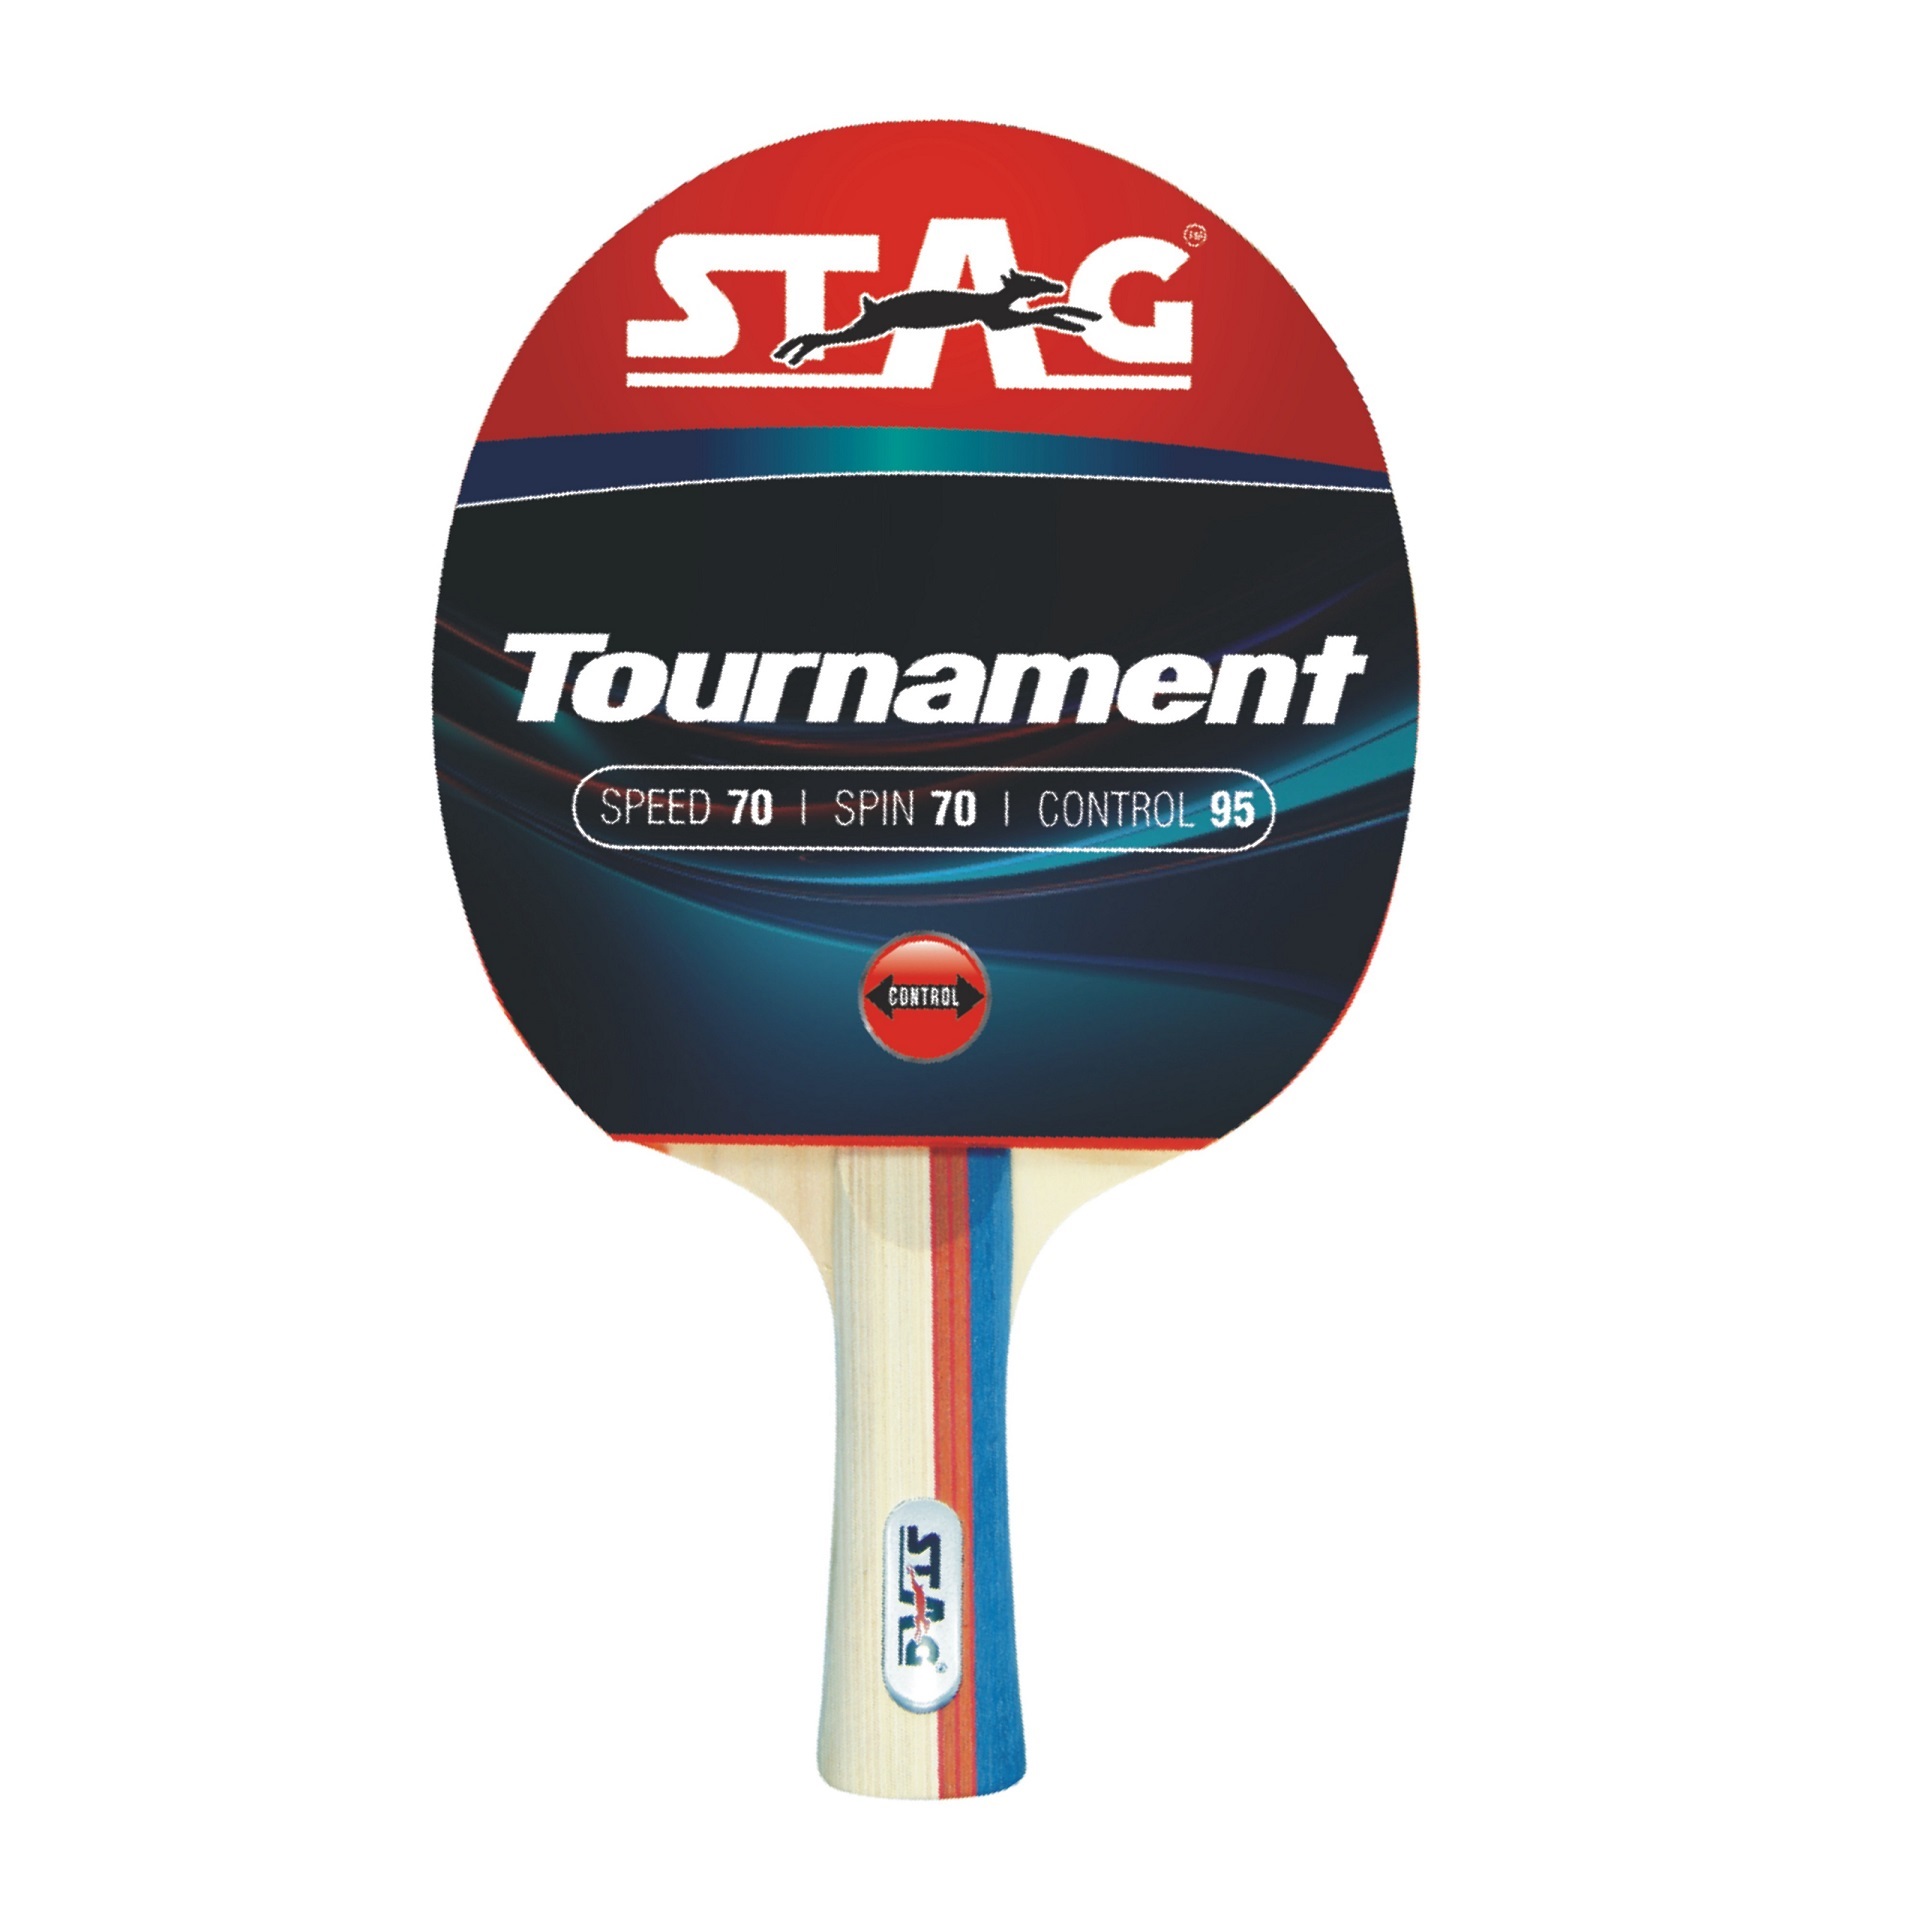     Stag Tournament